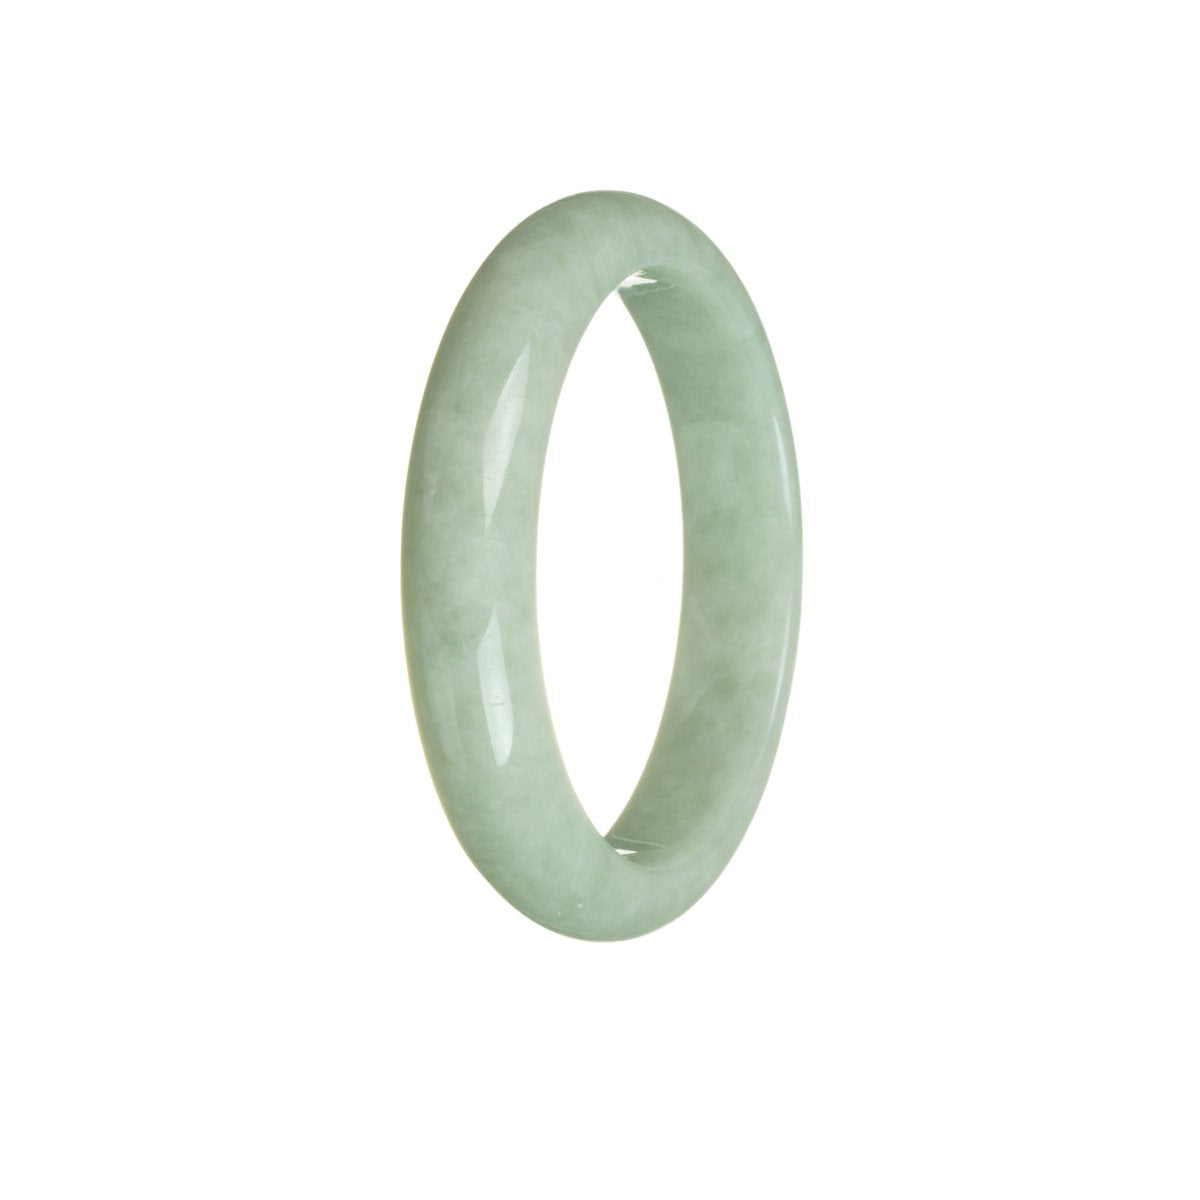 Certified Grade A Green Traditional Jade Bracelet - 55mm Half Moon